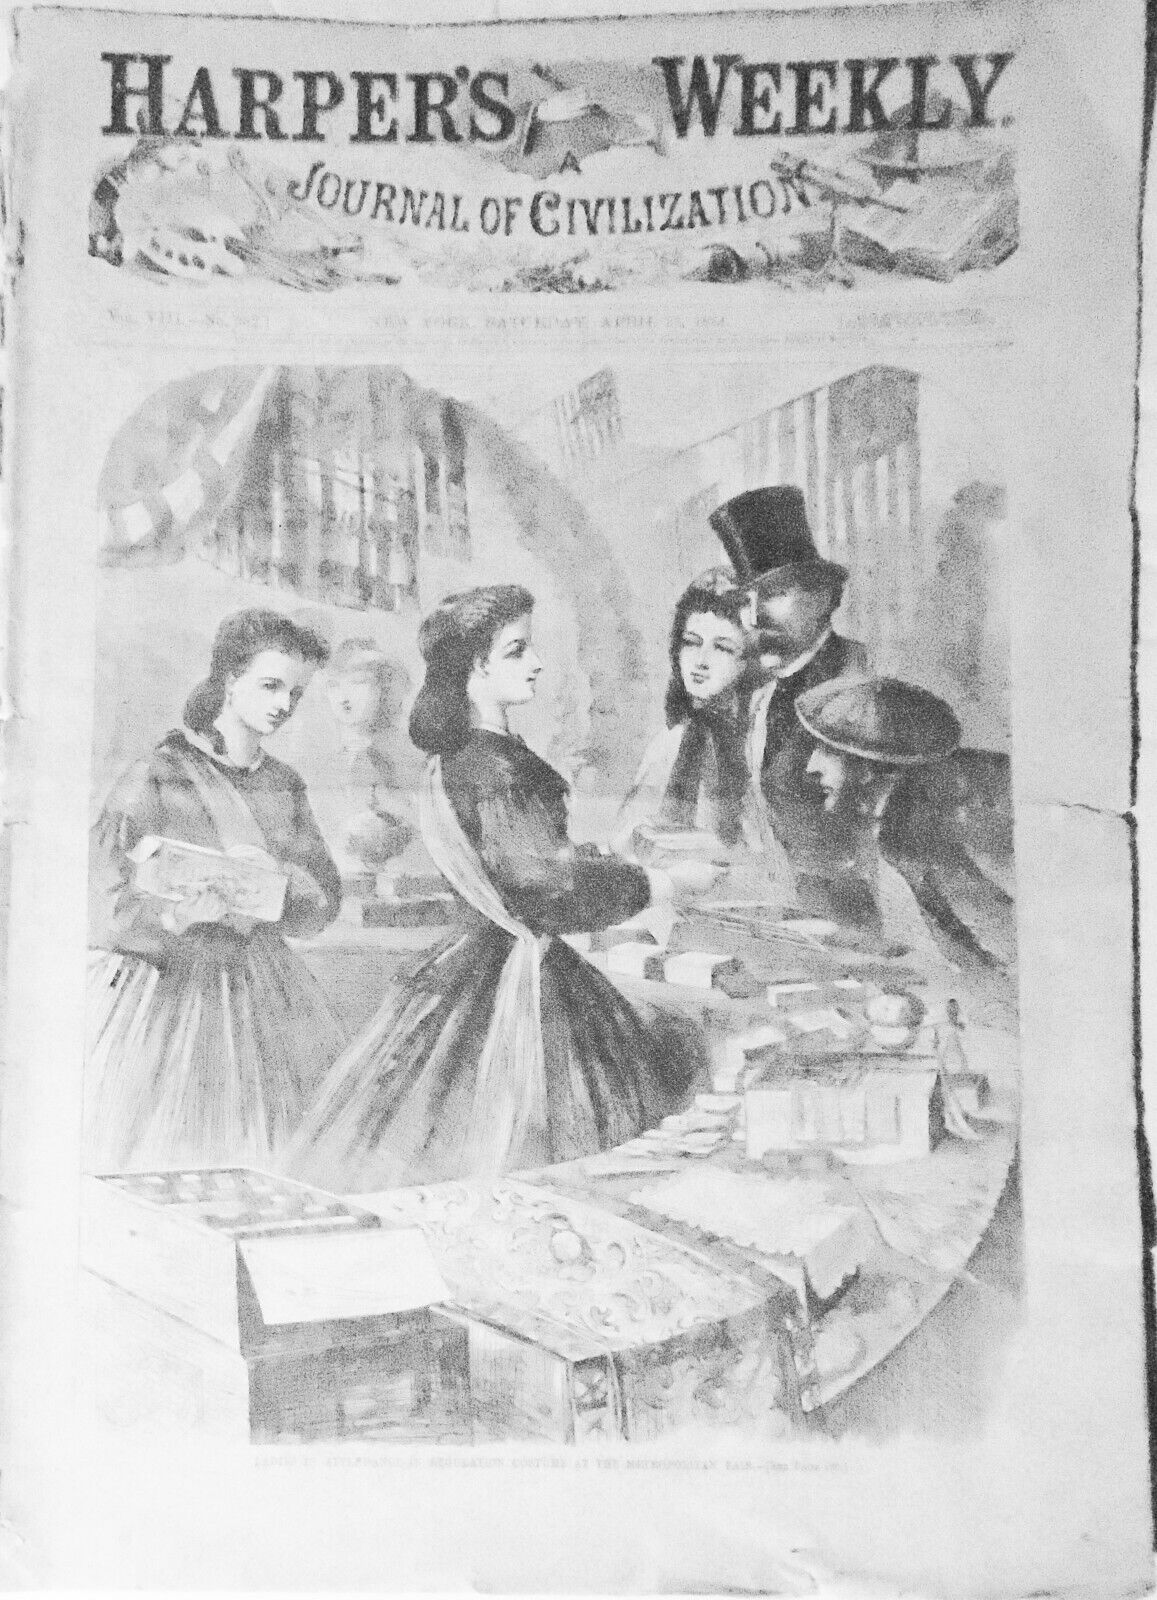 Harper's Weekly April 23, 1864 : Metropolitan Fair, NY - Original complete issue